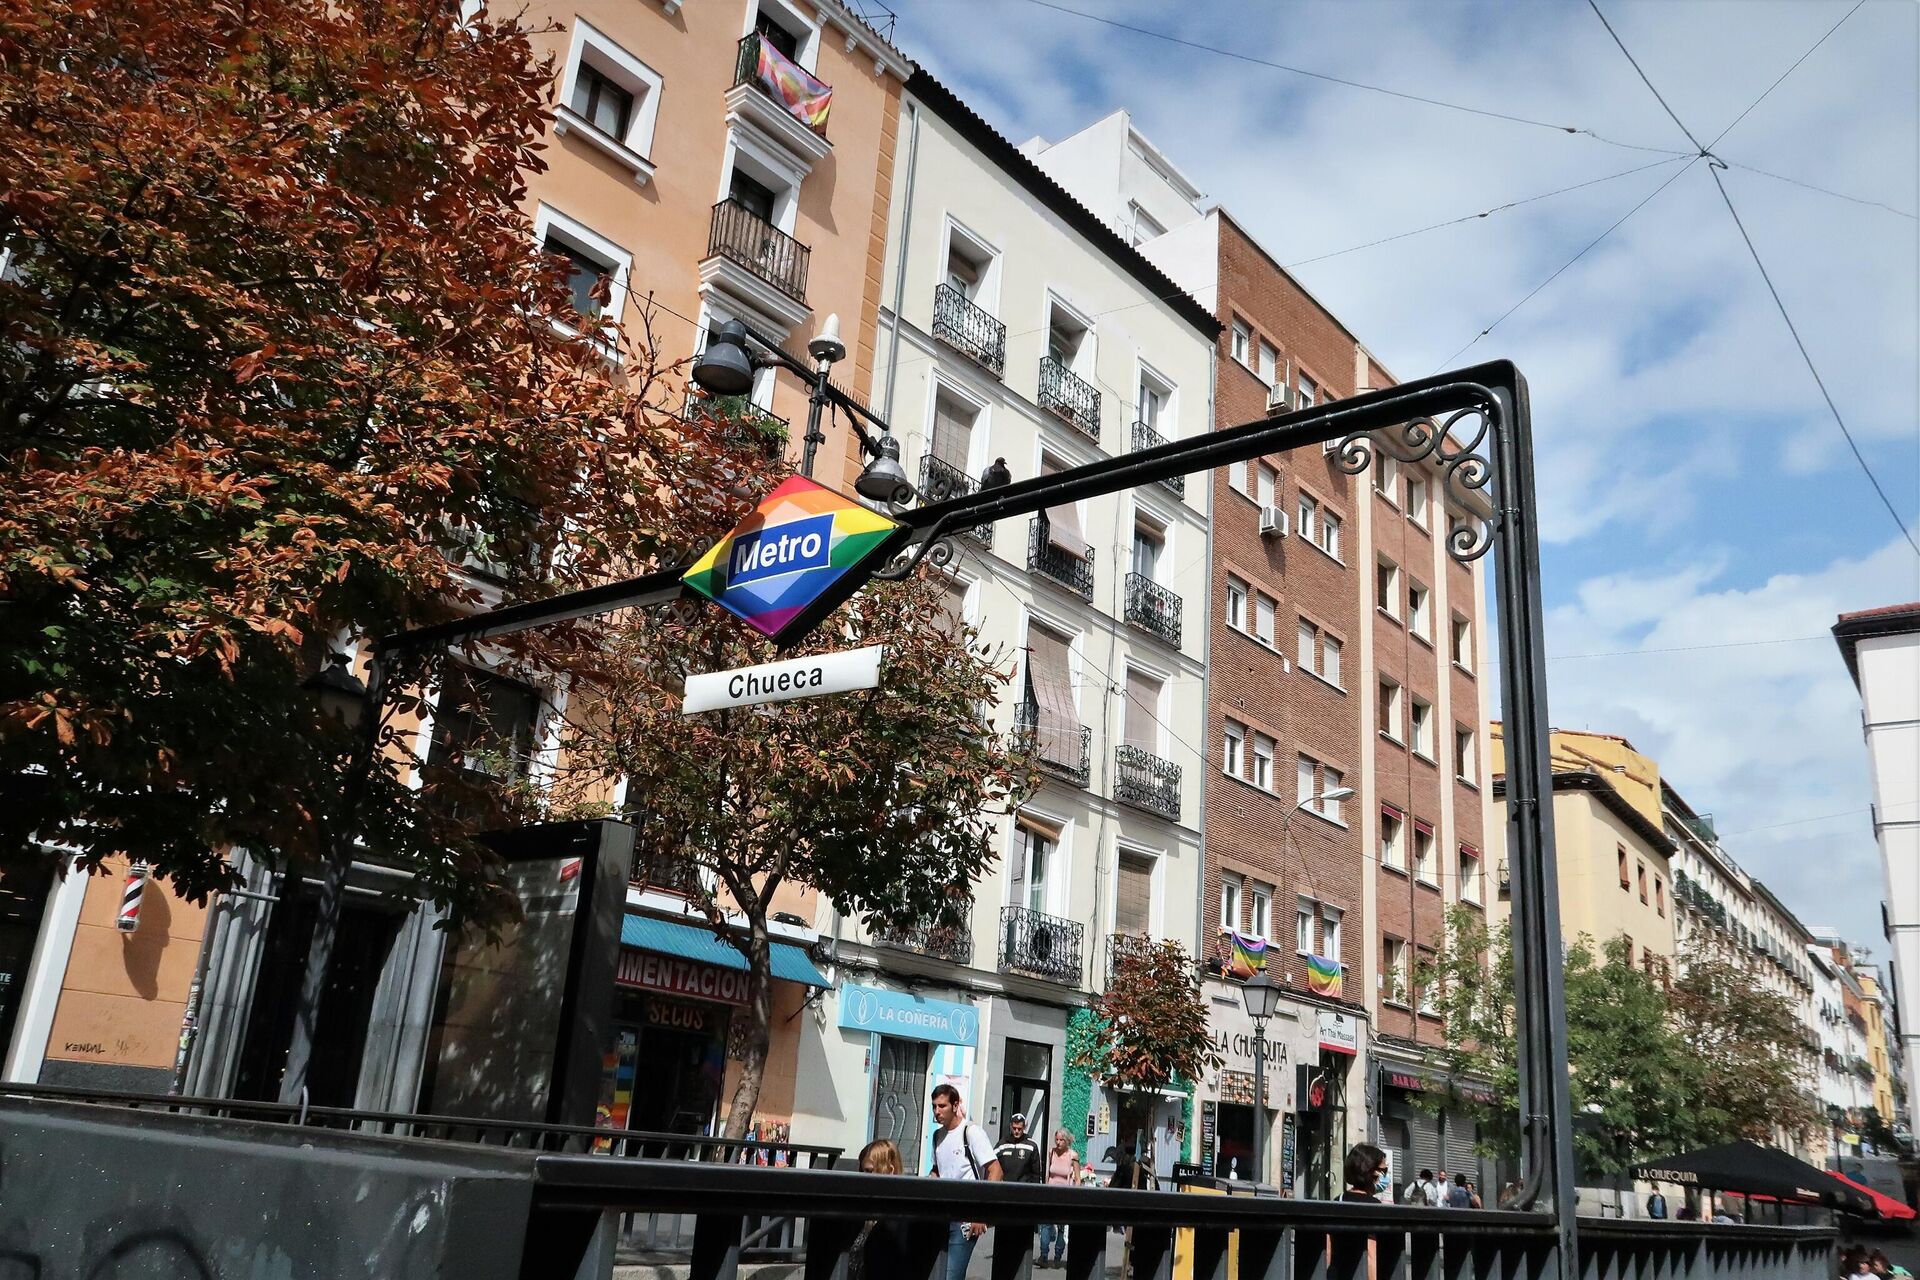 Parada de metro de Chueca, en Madrid, con la bandera arcoiris - Sputnik Mundo, 1920, 01.10.2021